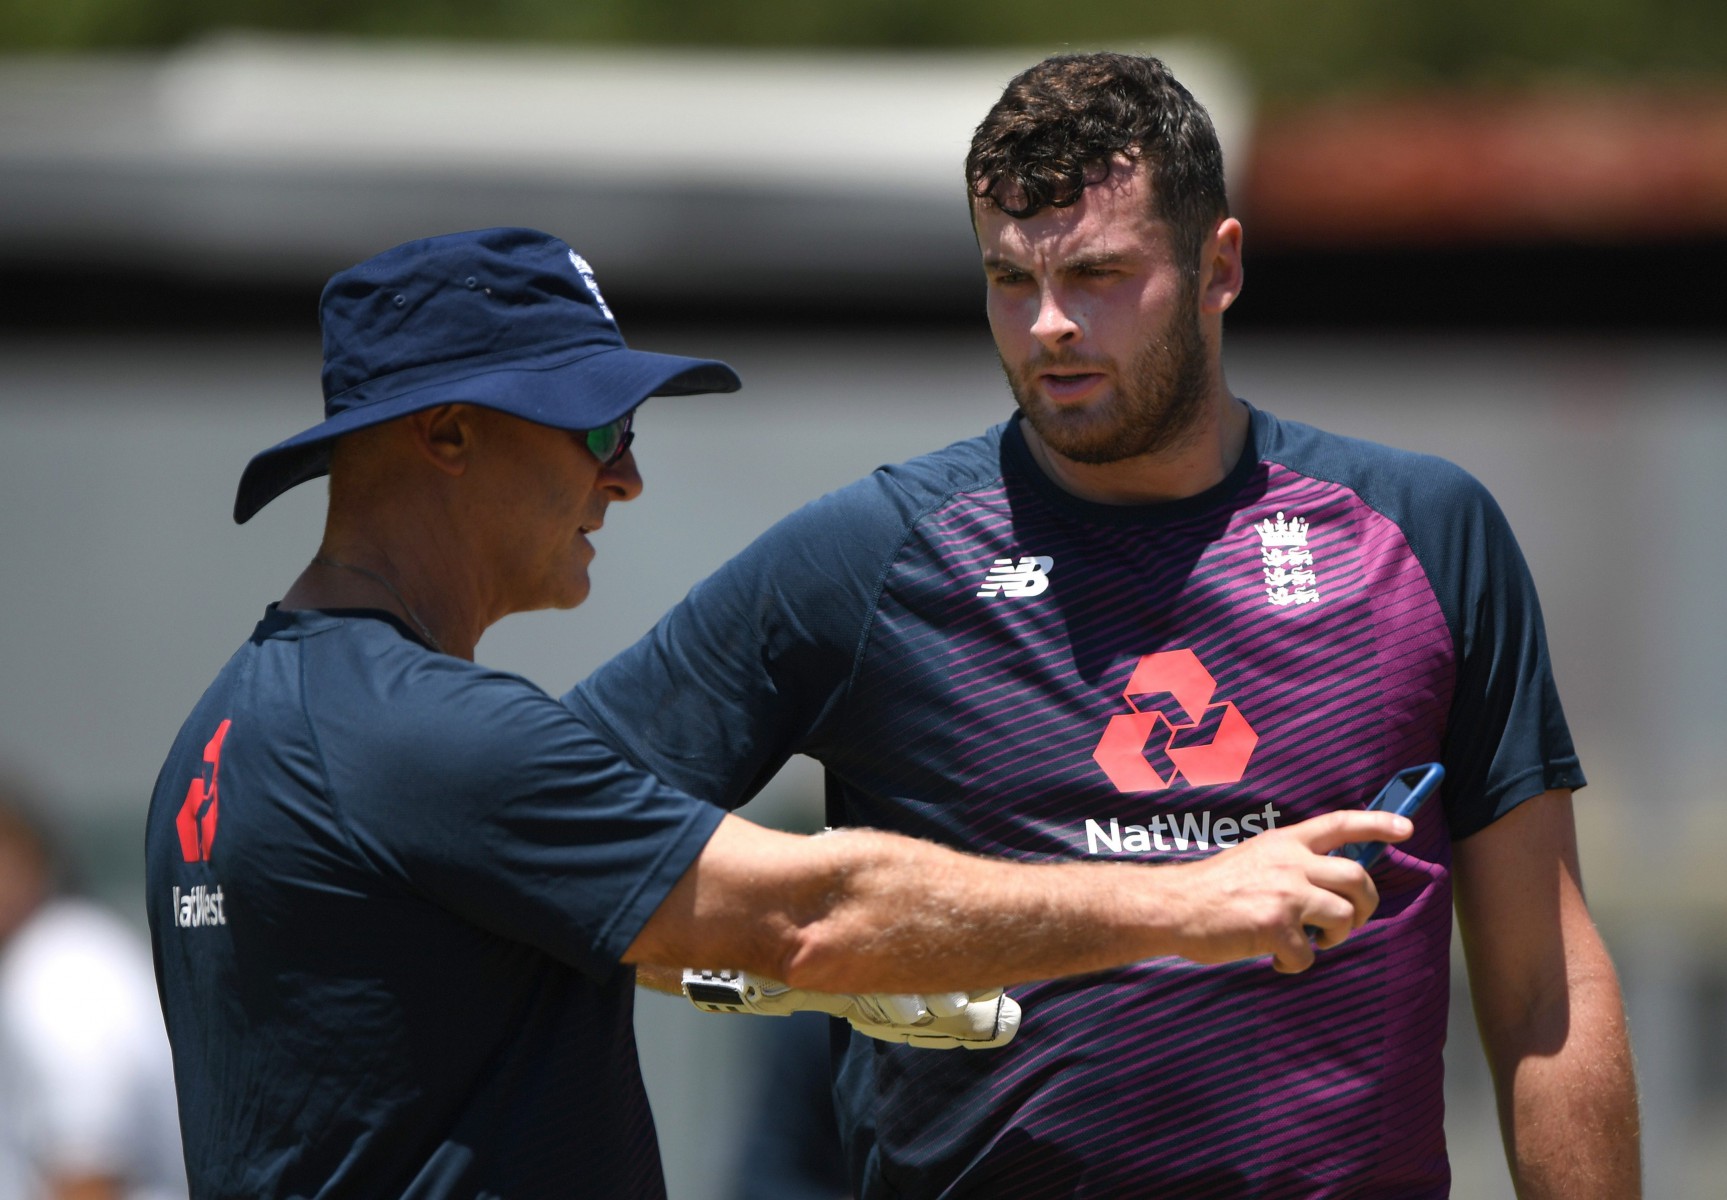 The Warwickshire batsman came under criticism after struggling for form in New Zealand